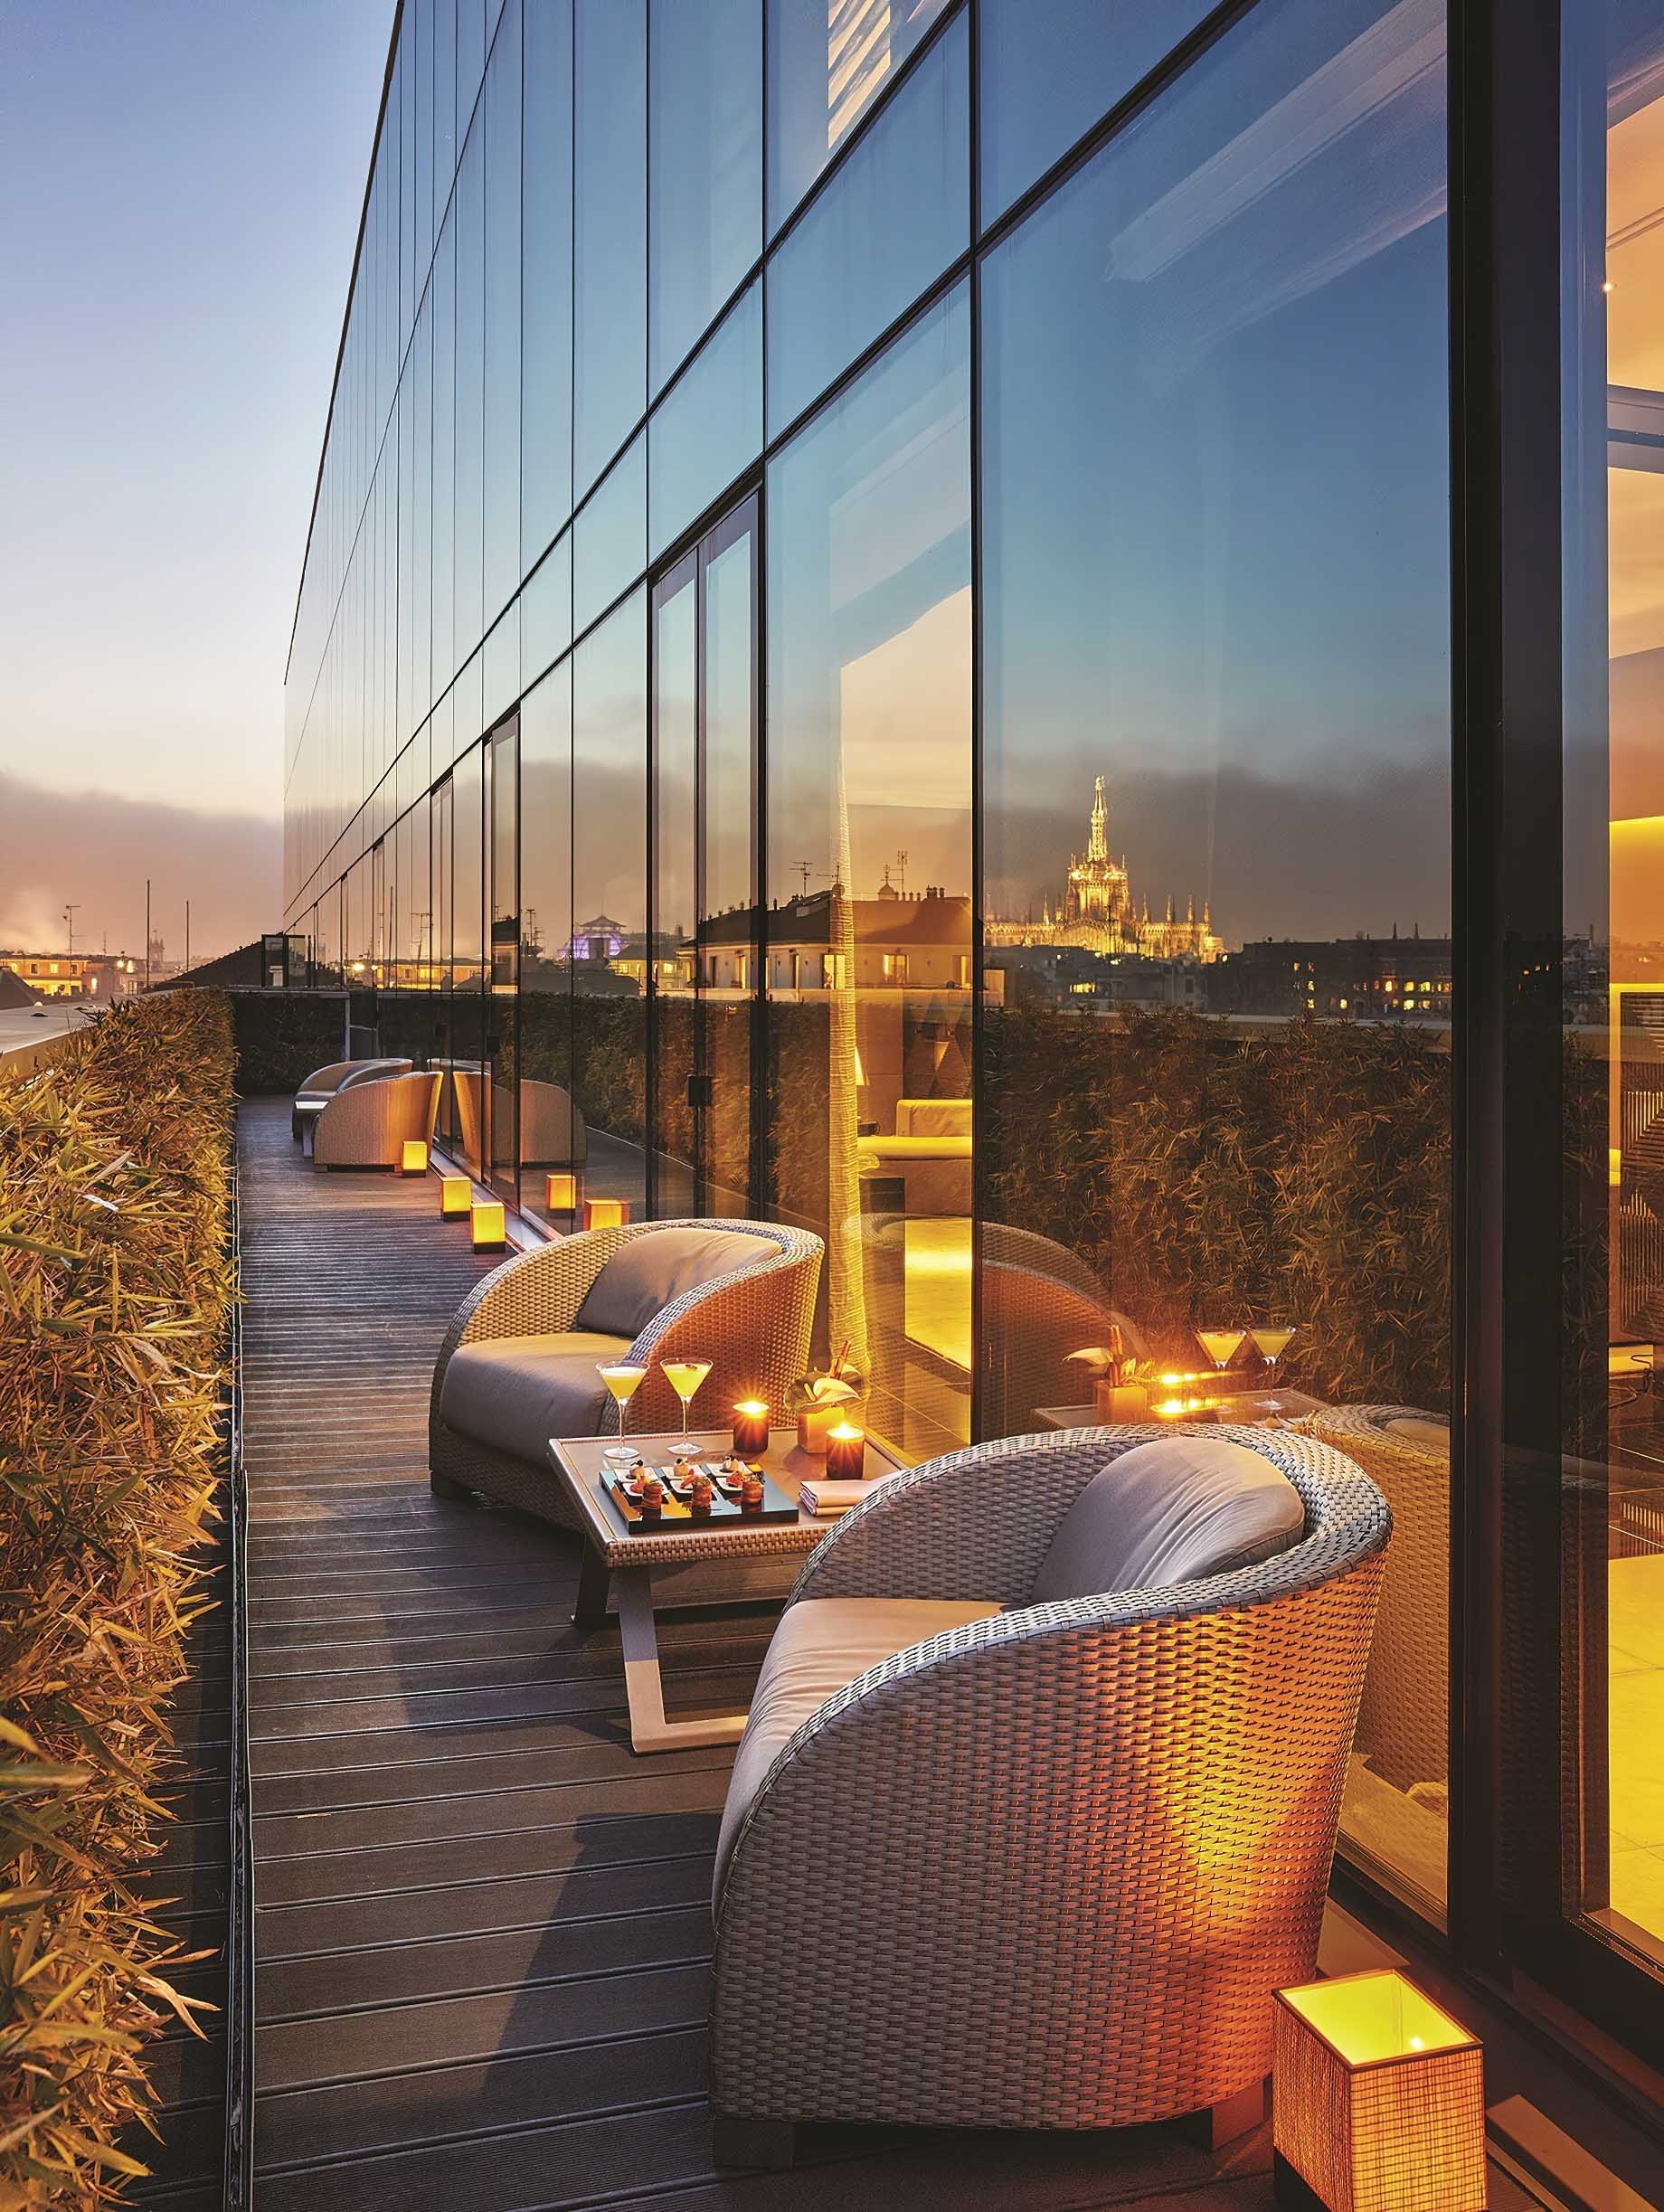 147 – Armani Hotel Milano – Milan, Italy – Armani Premiere Terrace Room Sunset View